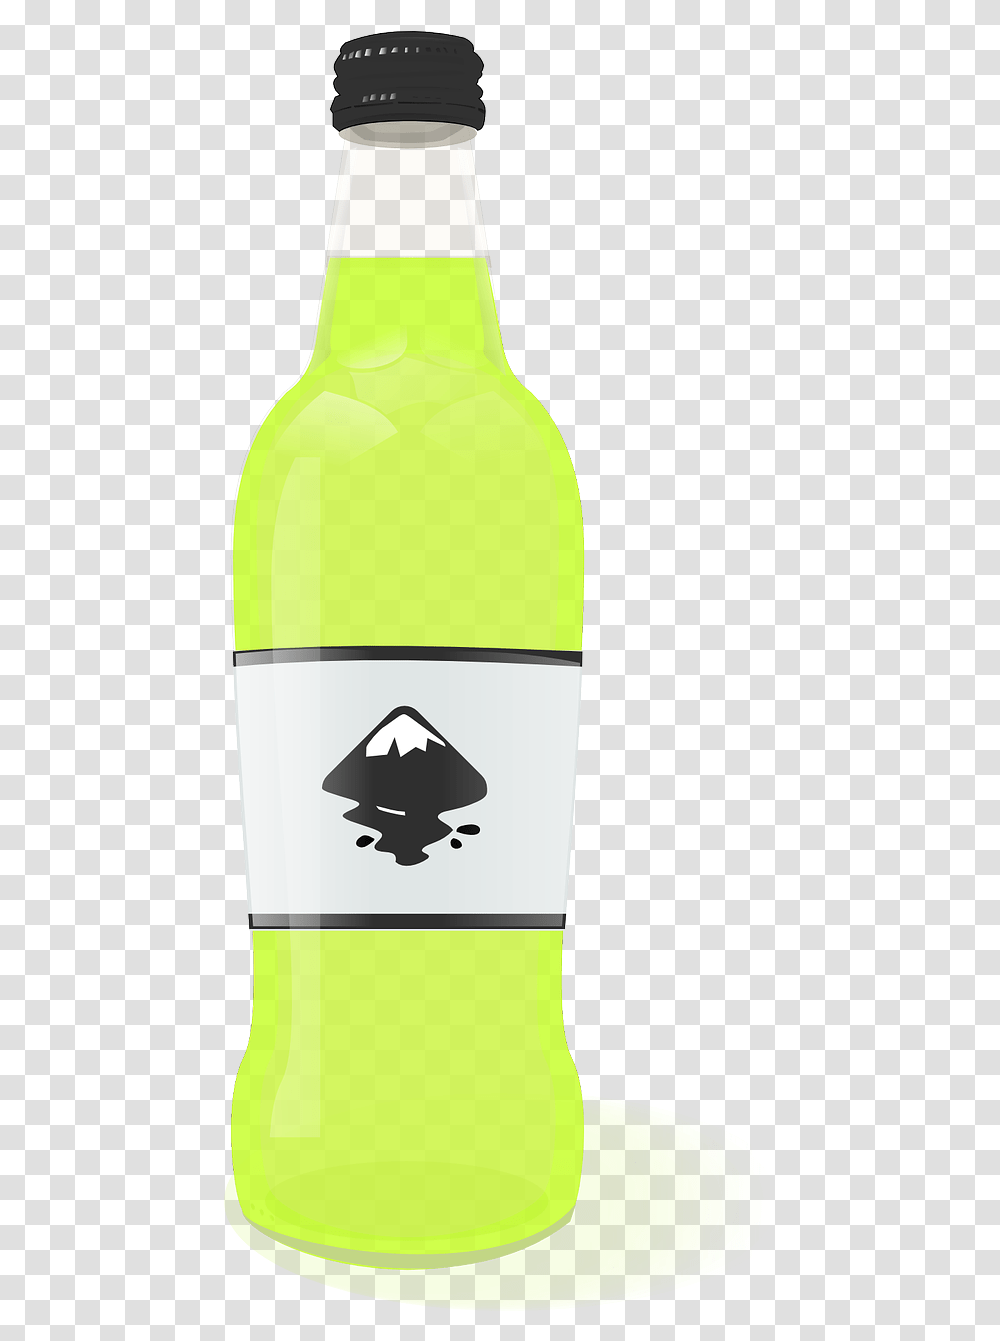 Beverage Drinking Lemonade Free Photo Inkscape, Bottle, Alcohol, Cosmetics, Water Bottle Transparent Png